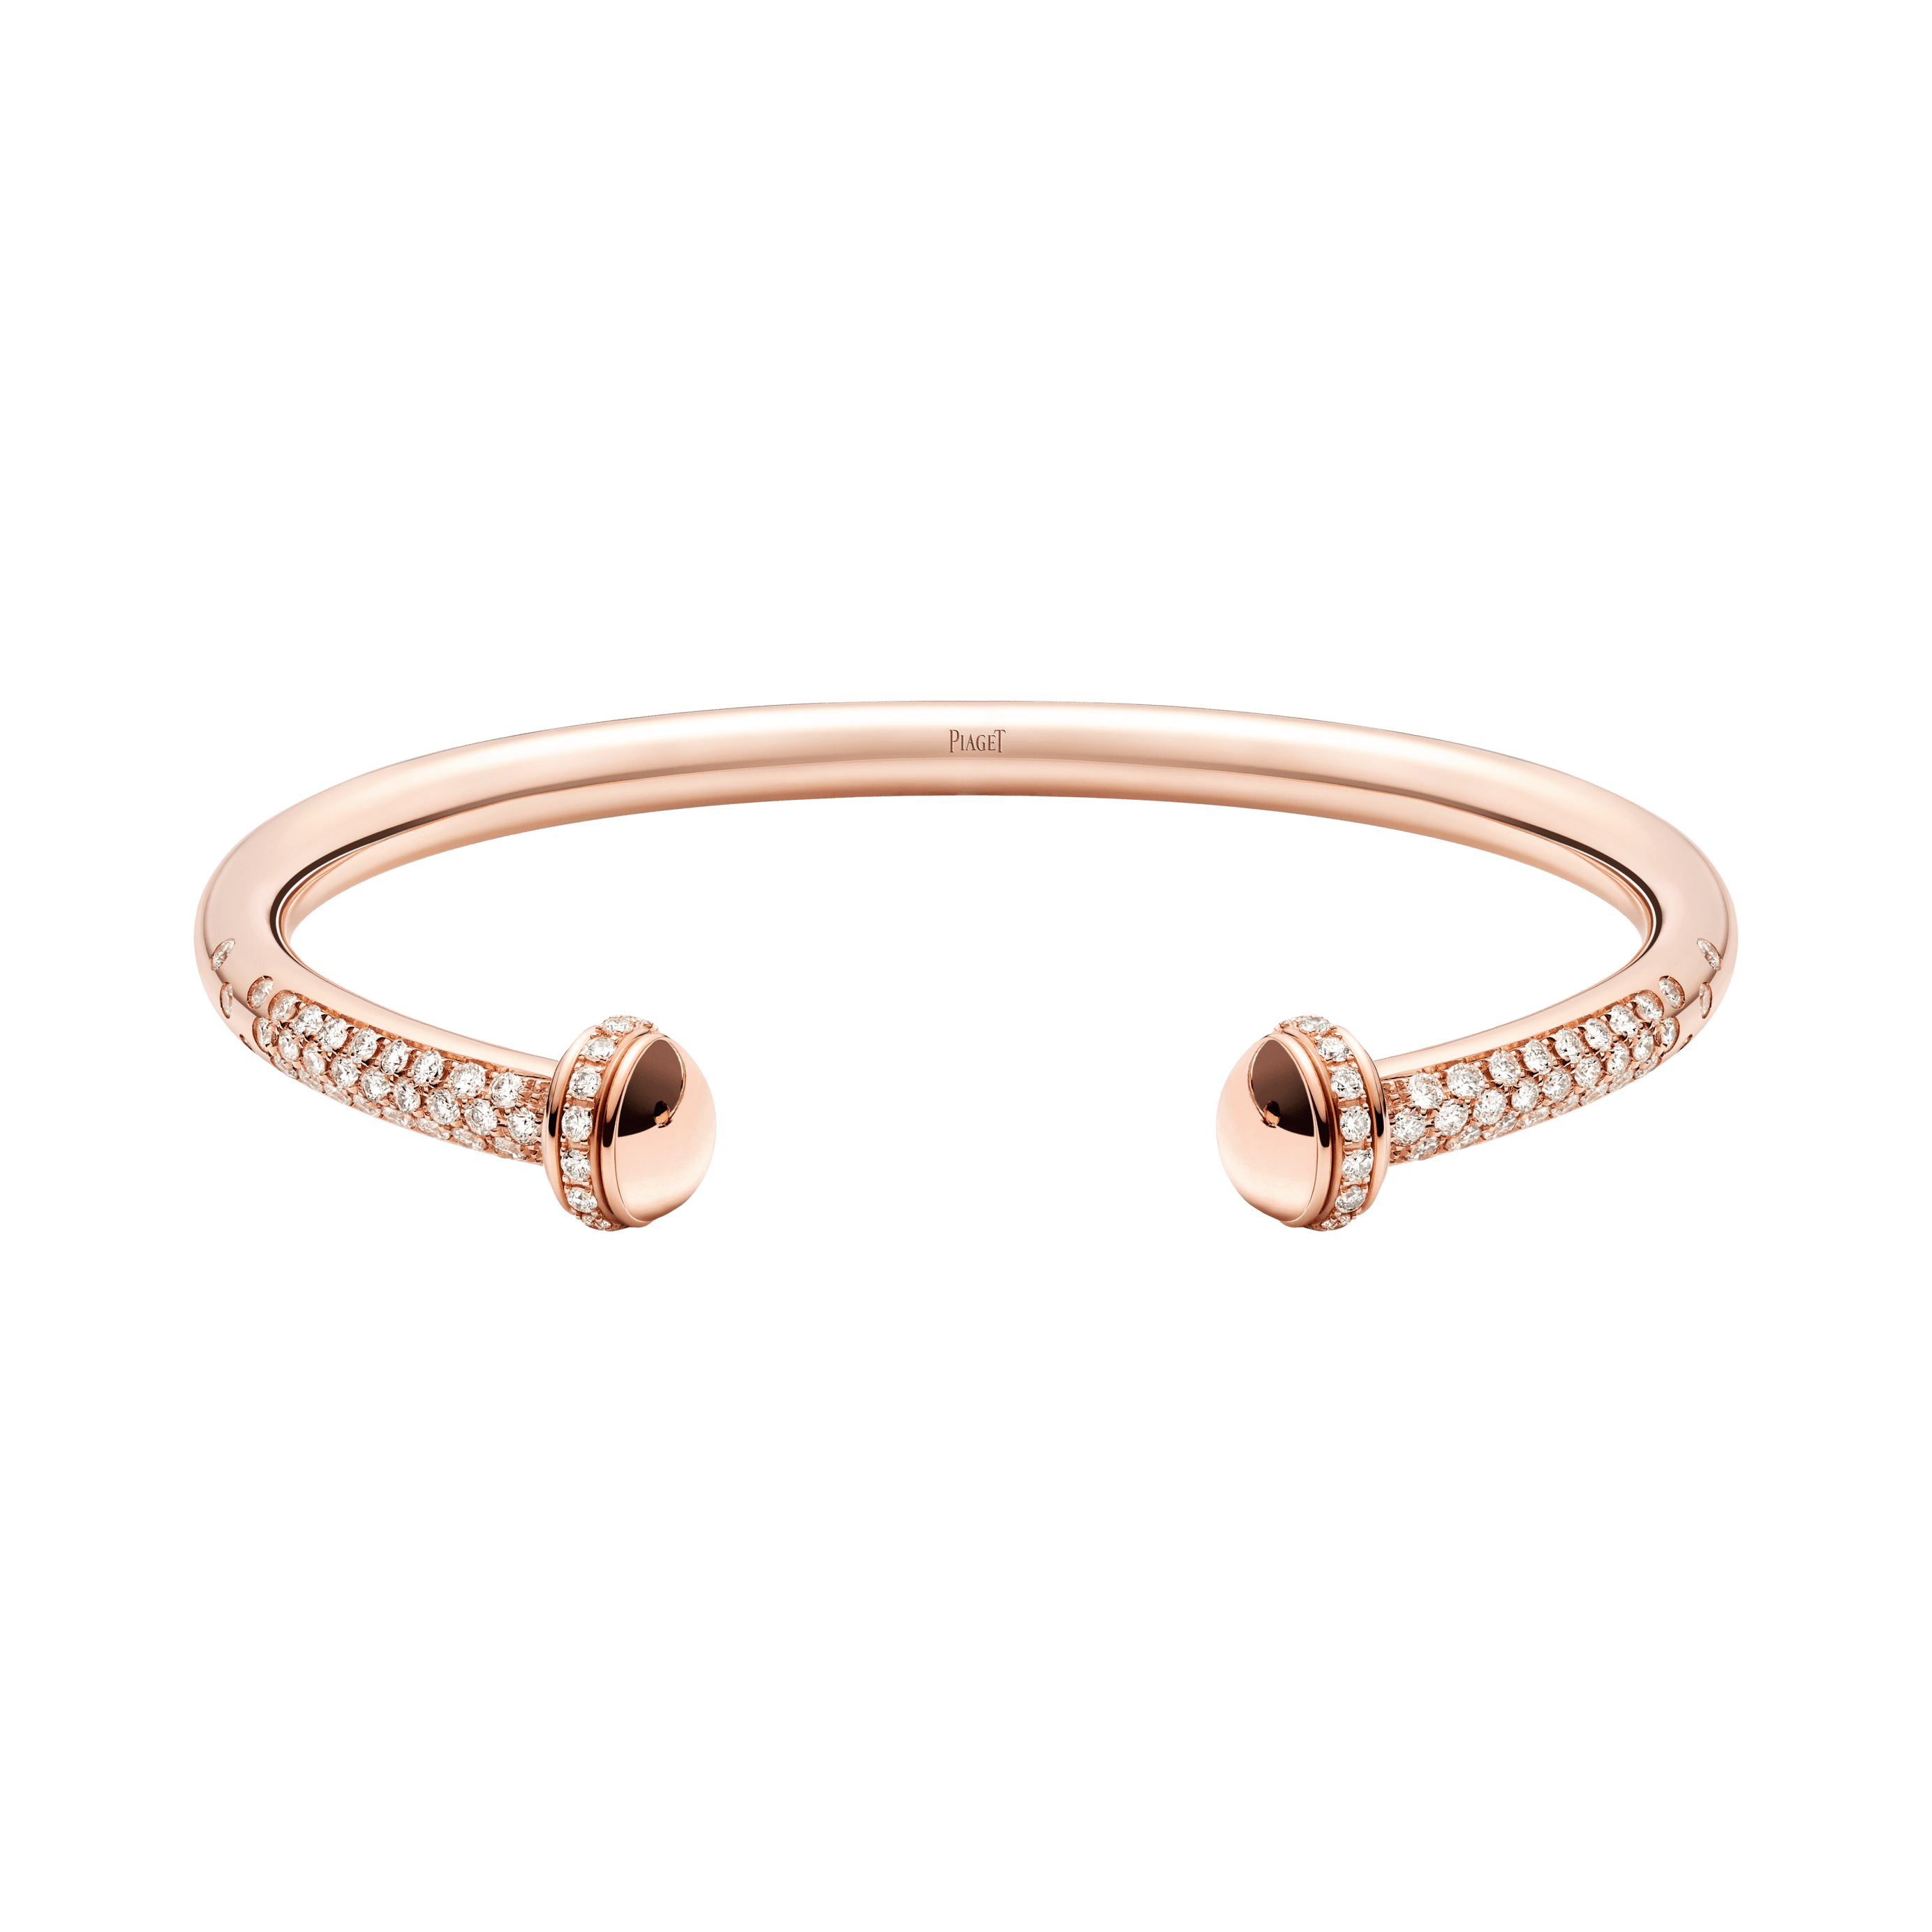 Piaget Rose Gold Diamond Open Bangle Bracelet G36pv400